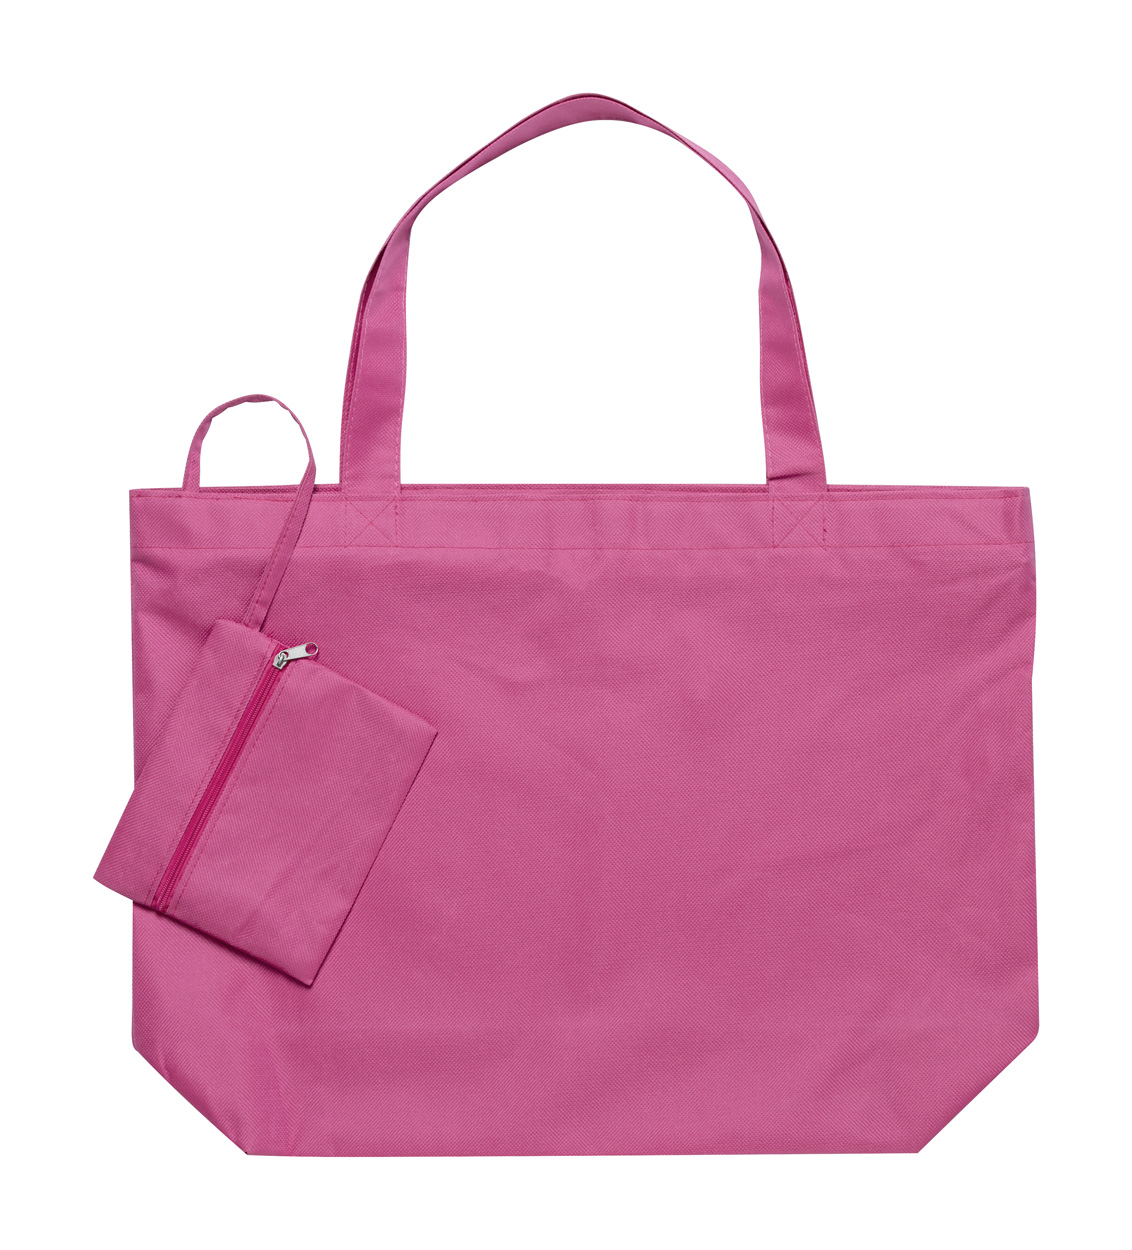 Revile beach bag - pink